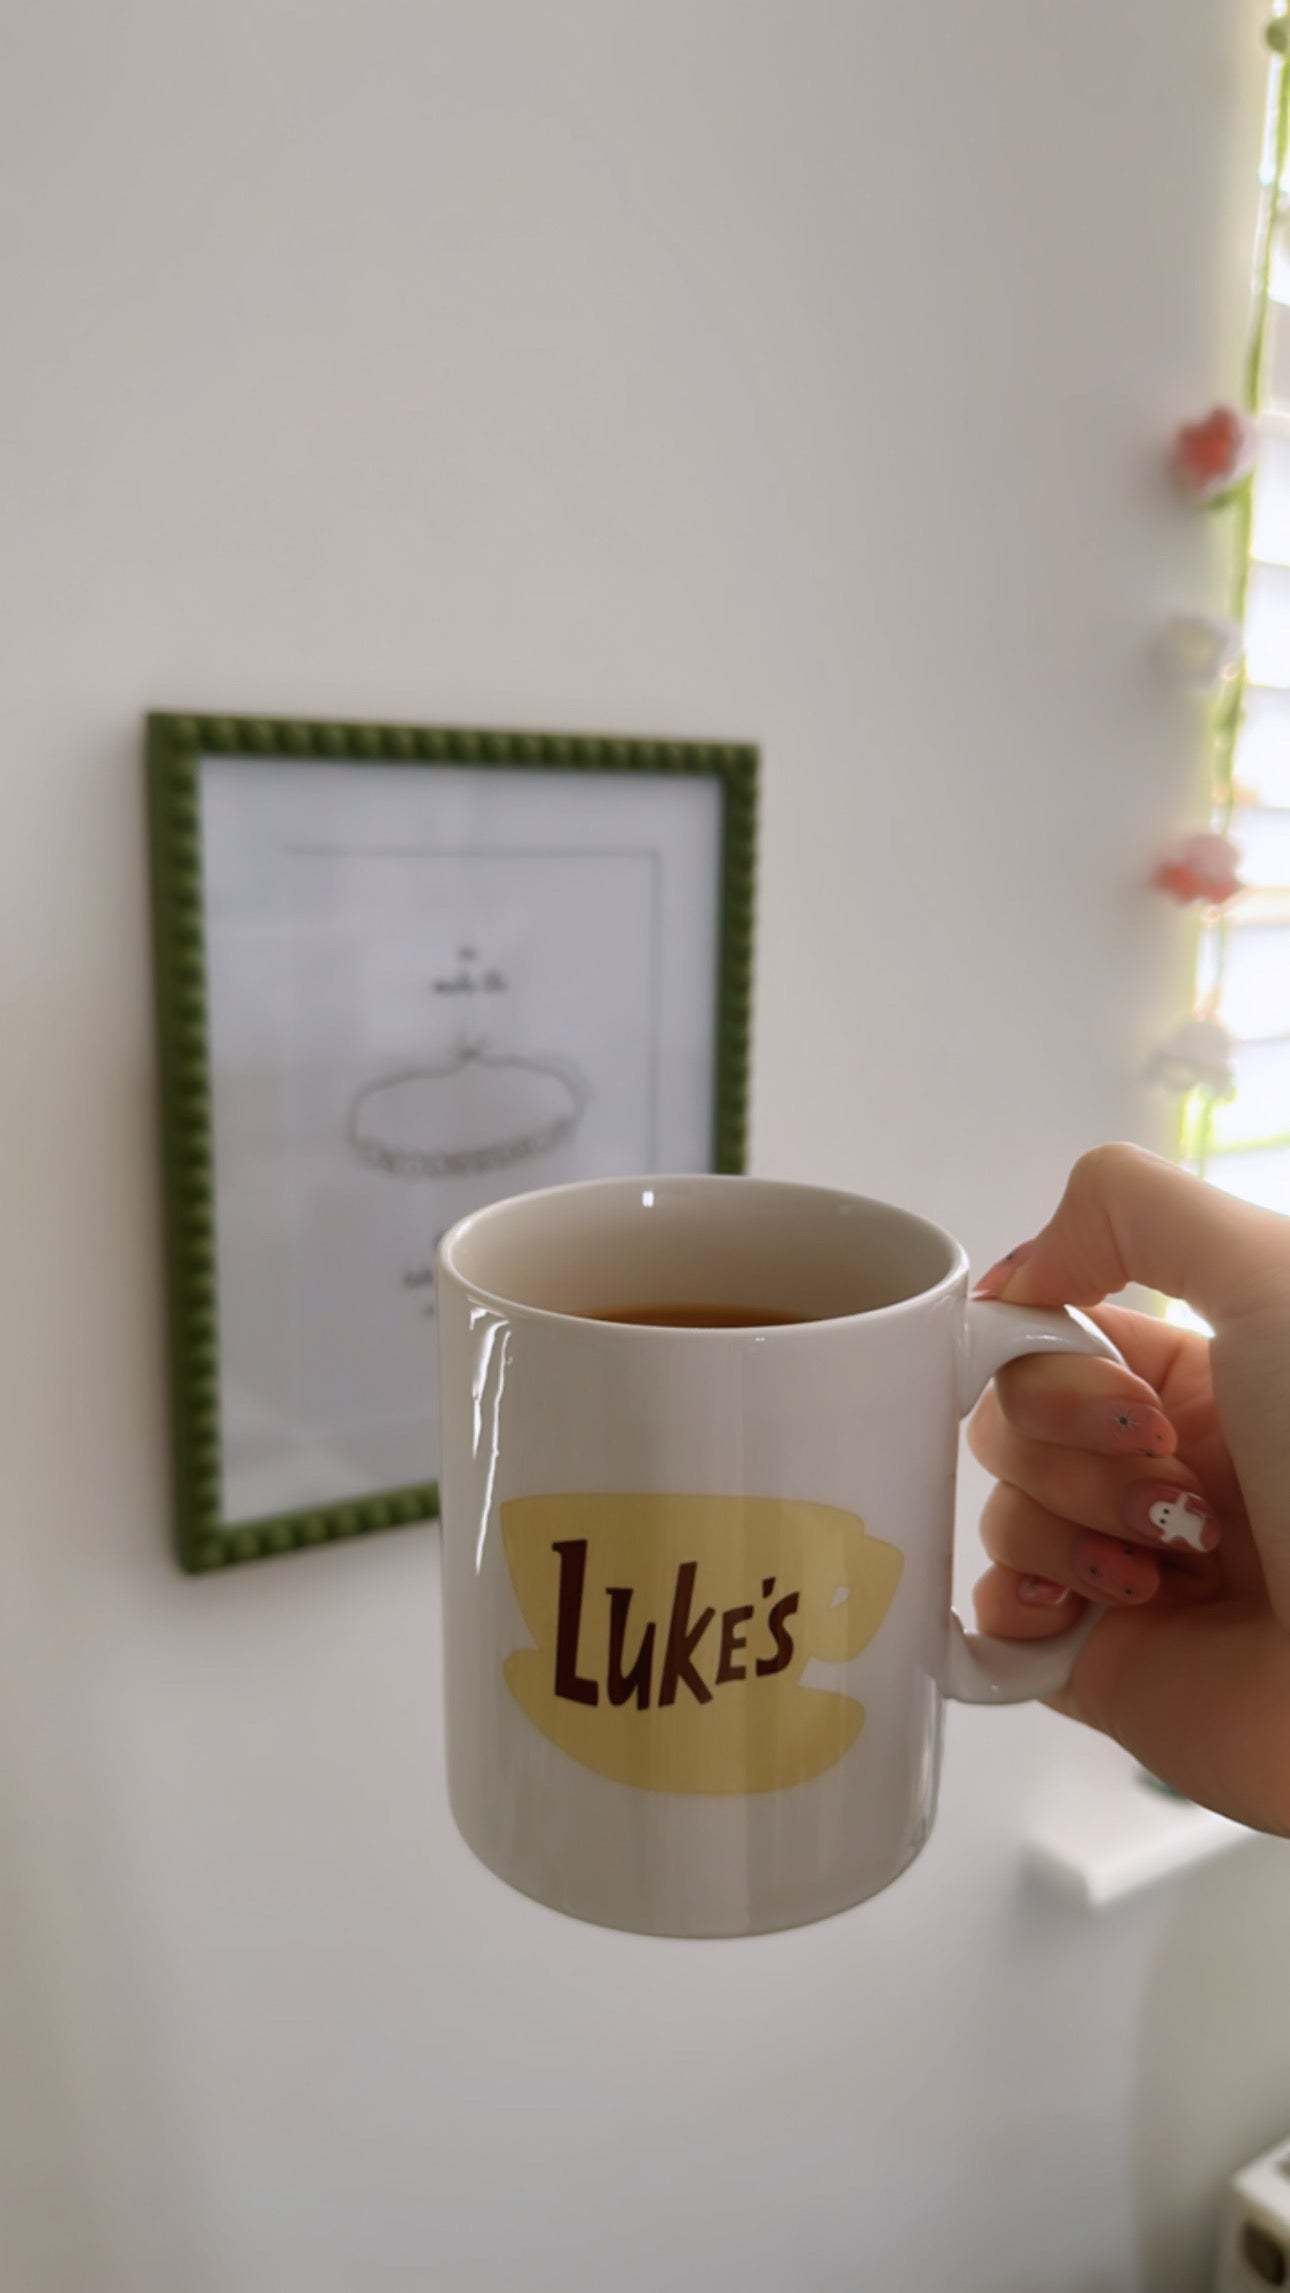 Luke's Mug